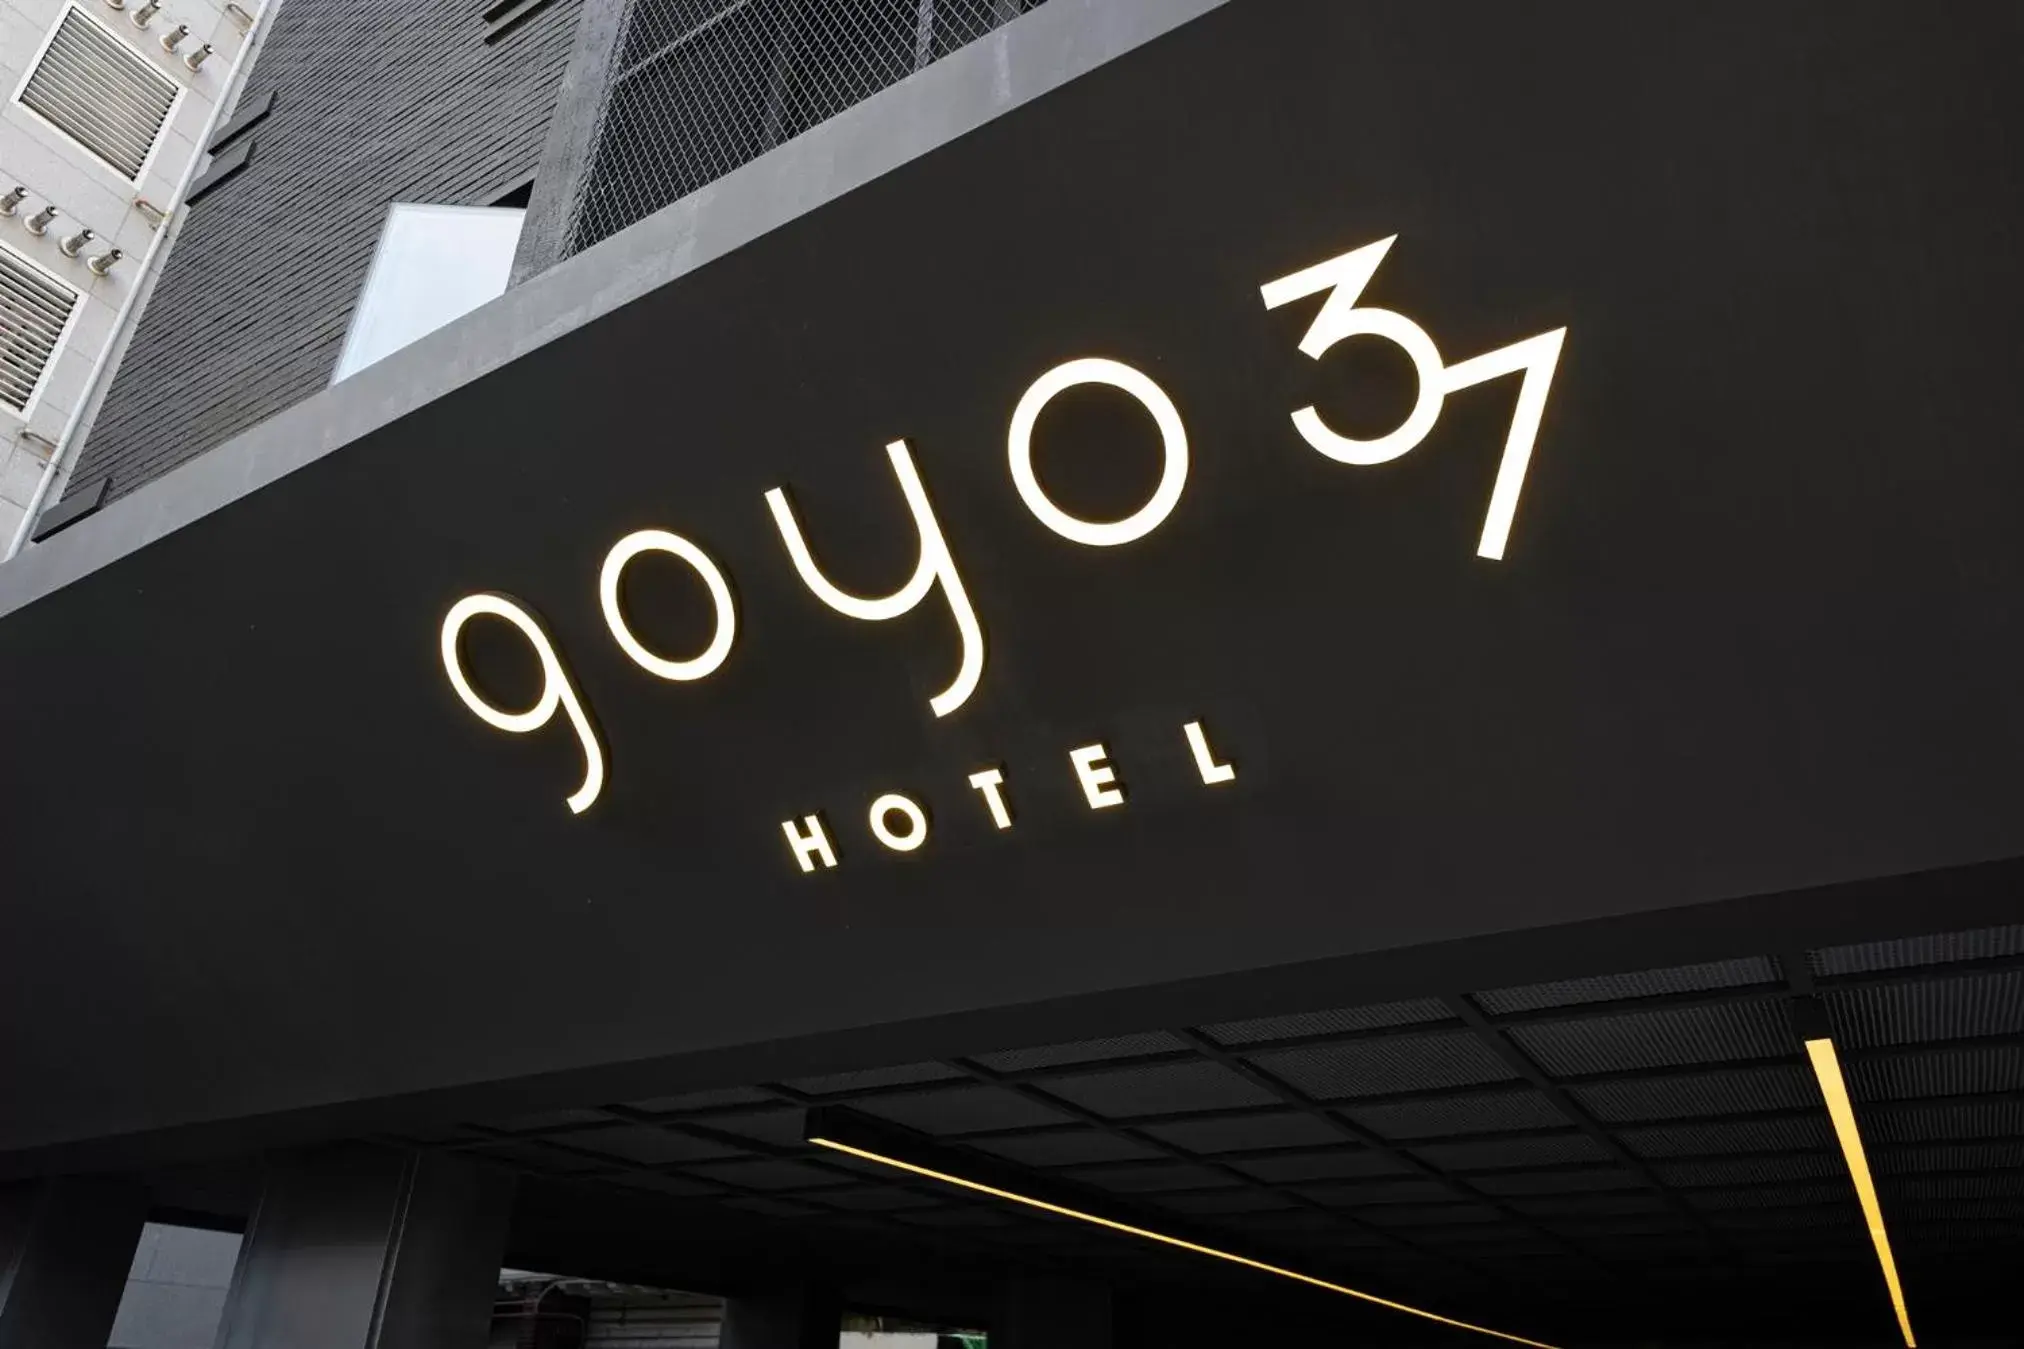 Property logo or sign in Osan GOYO 37 Hotel